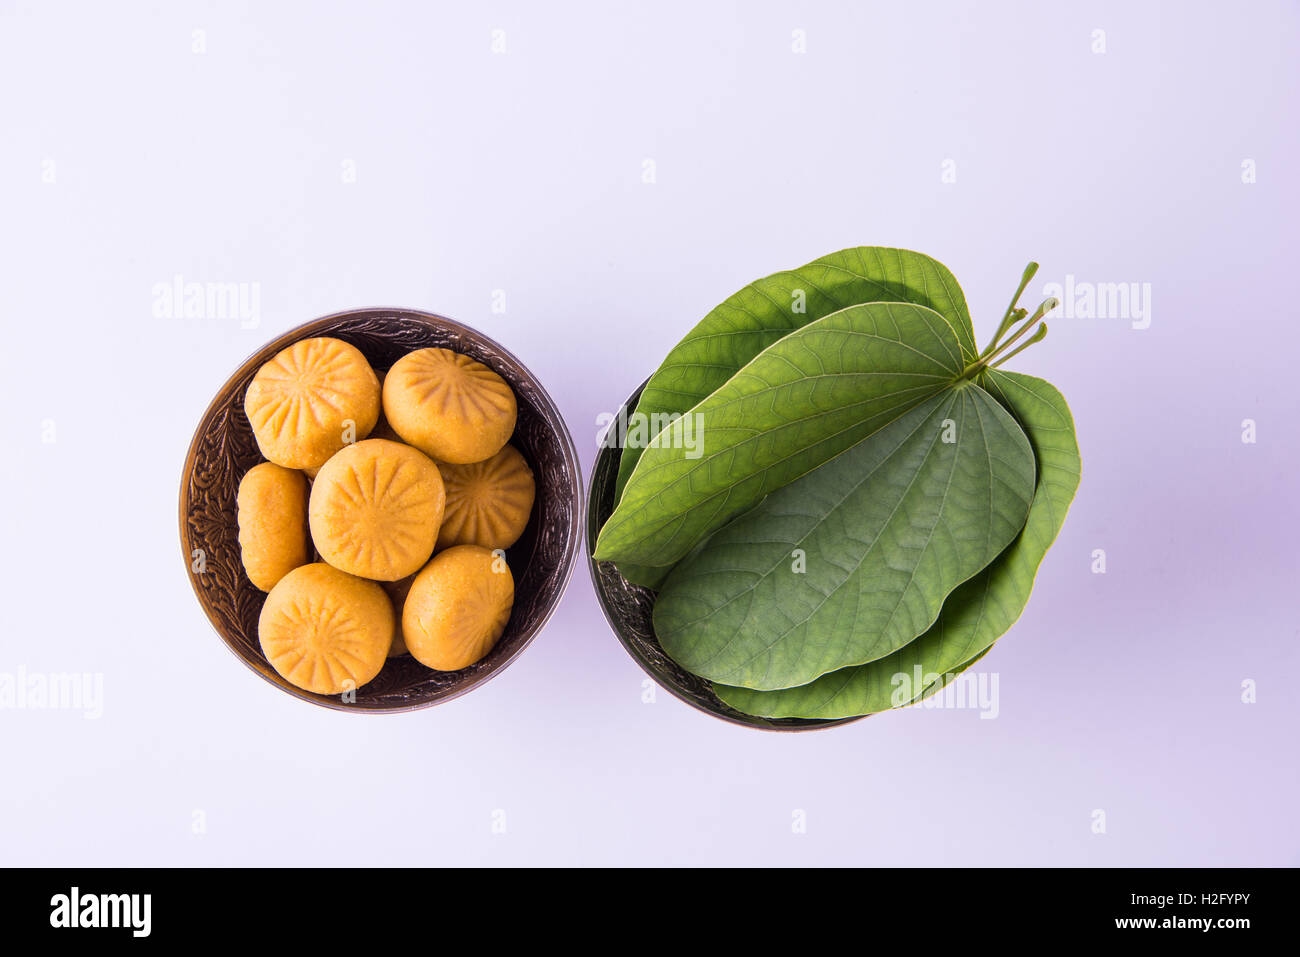 greeting card saying happy vijayadashmi or happy dussehra, indian festival dussehra, showing apta leaf or Bauhinia racemosa Stock Photo